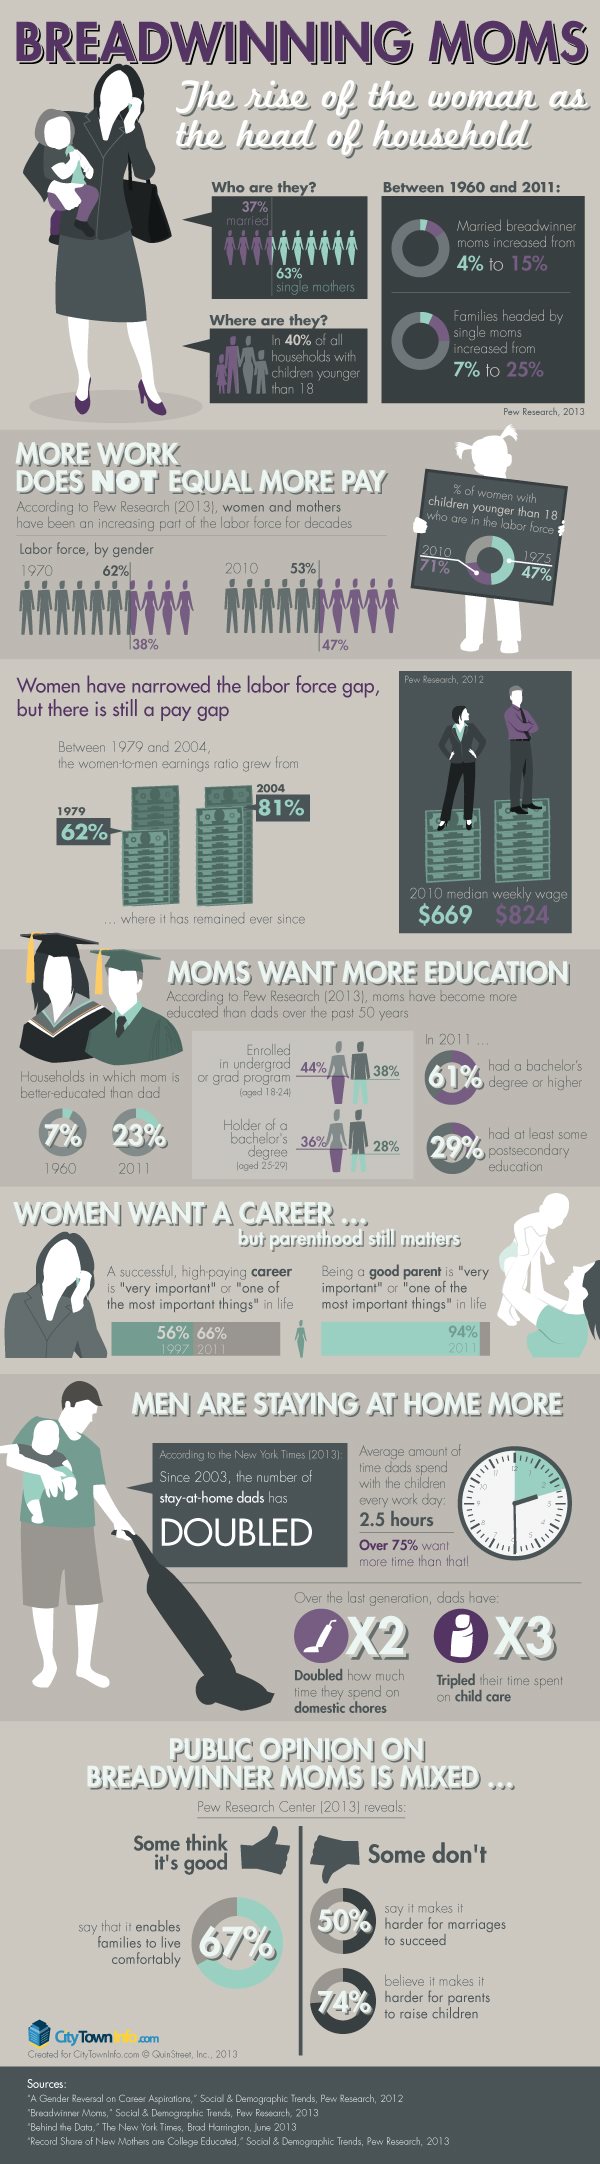 Breadwinning-Moms infographic